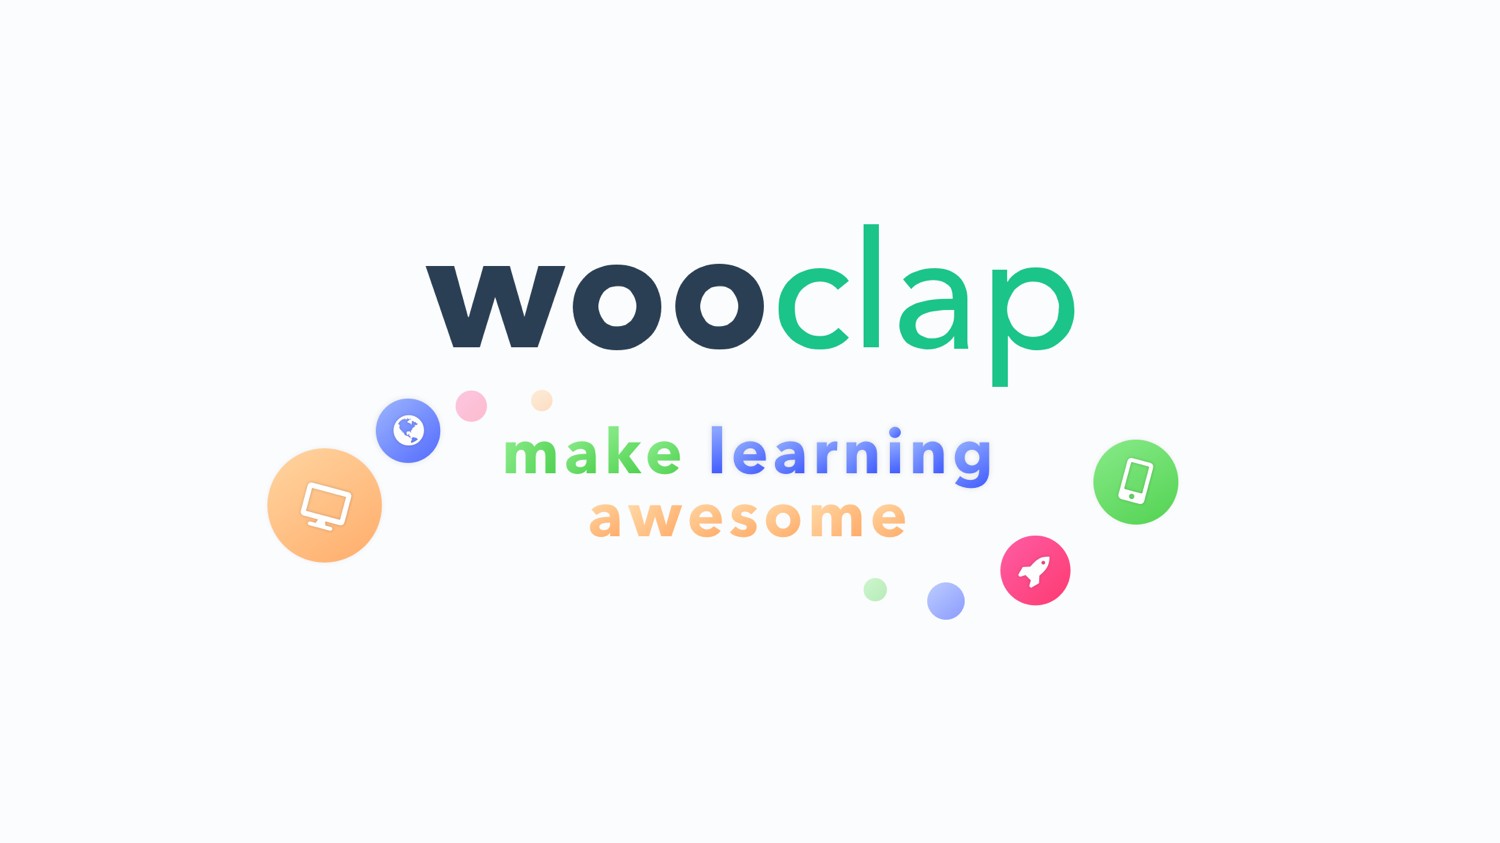 Wooclap - make learning awesome